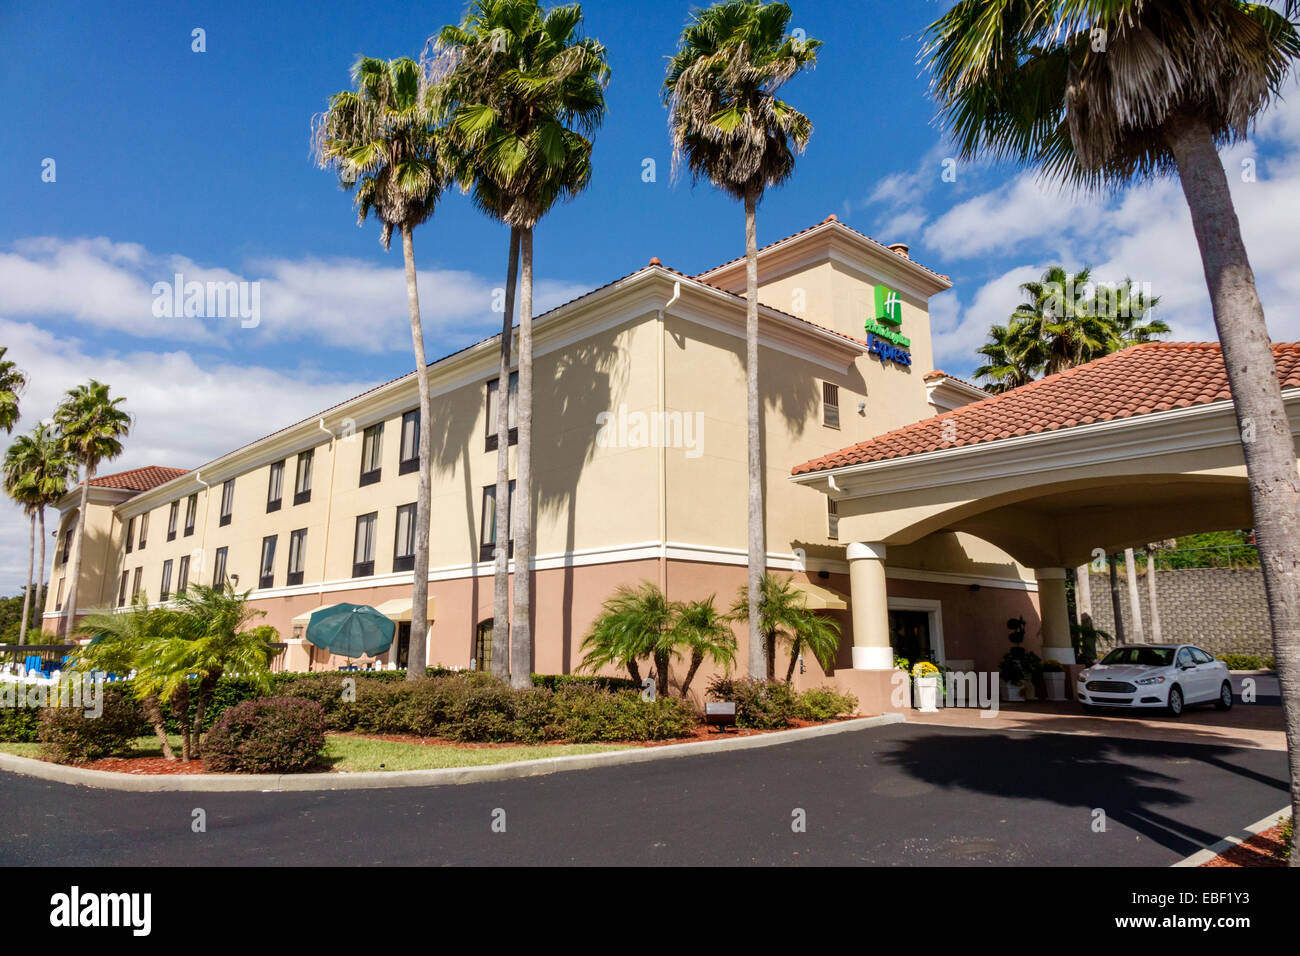 Clermont Florida,Holiday Inn Express,motel,edificio,frente,entrada,visitantes viaje recorrido turístico turismo puntos de referencia cultura cultural, Foto de stock